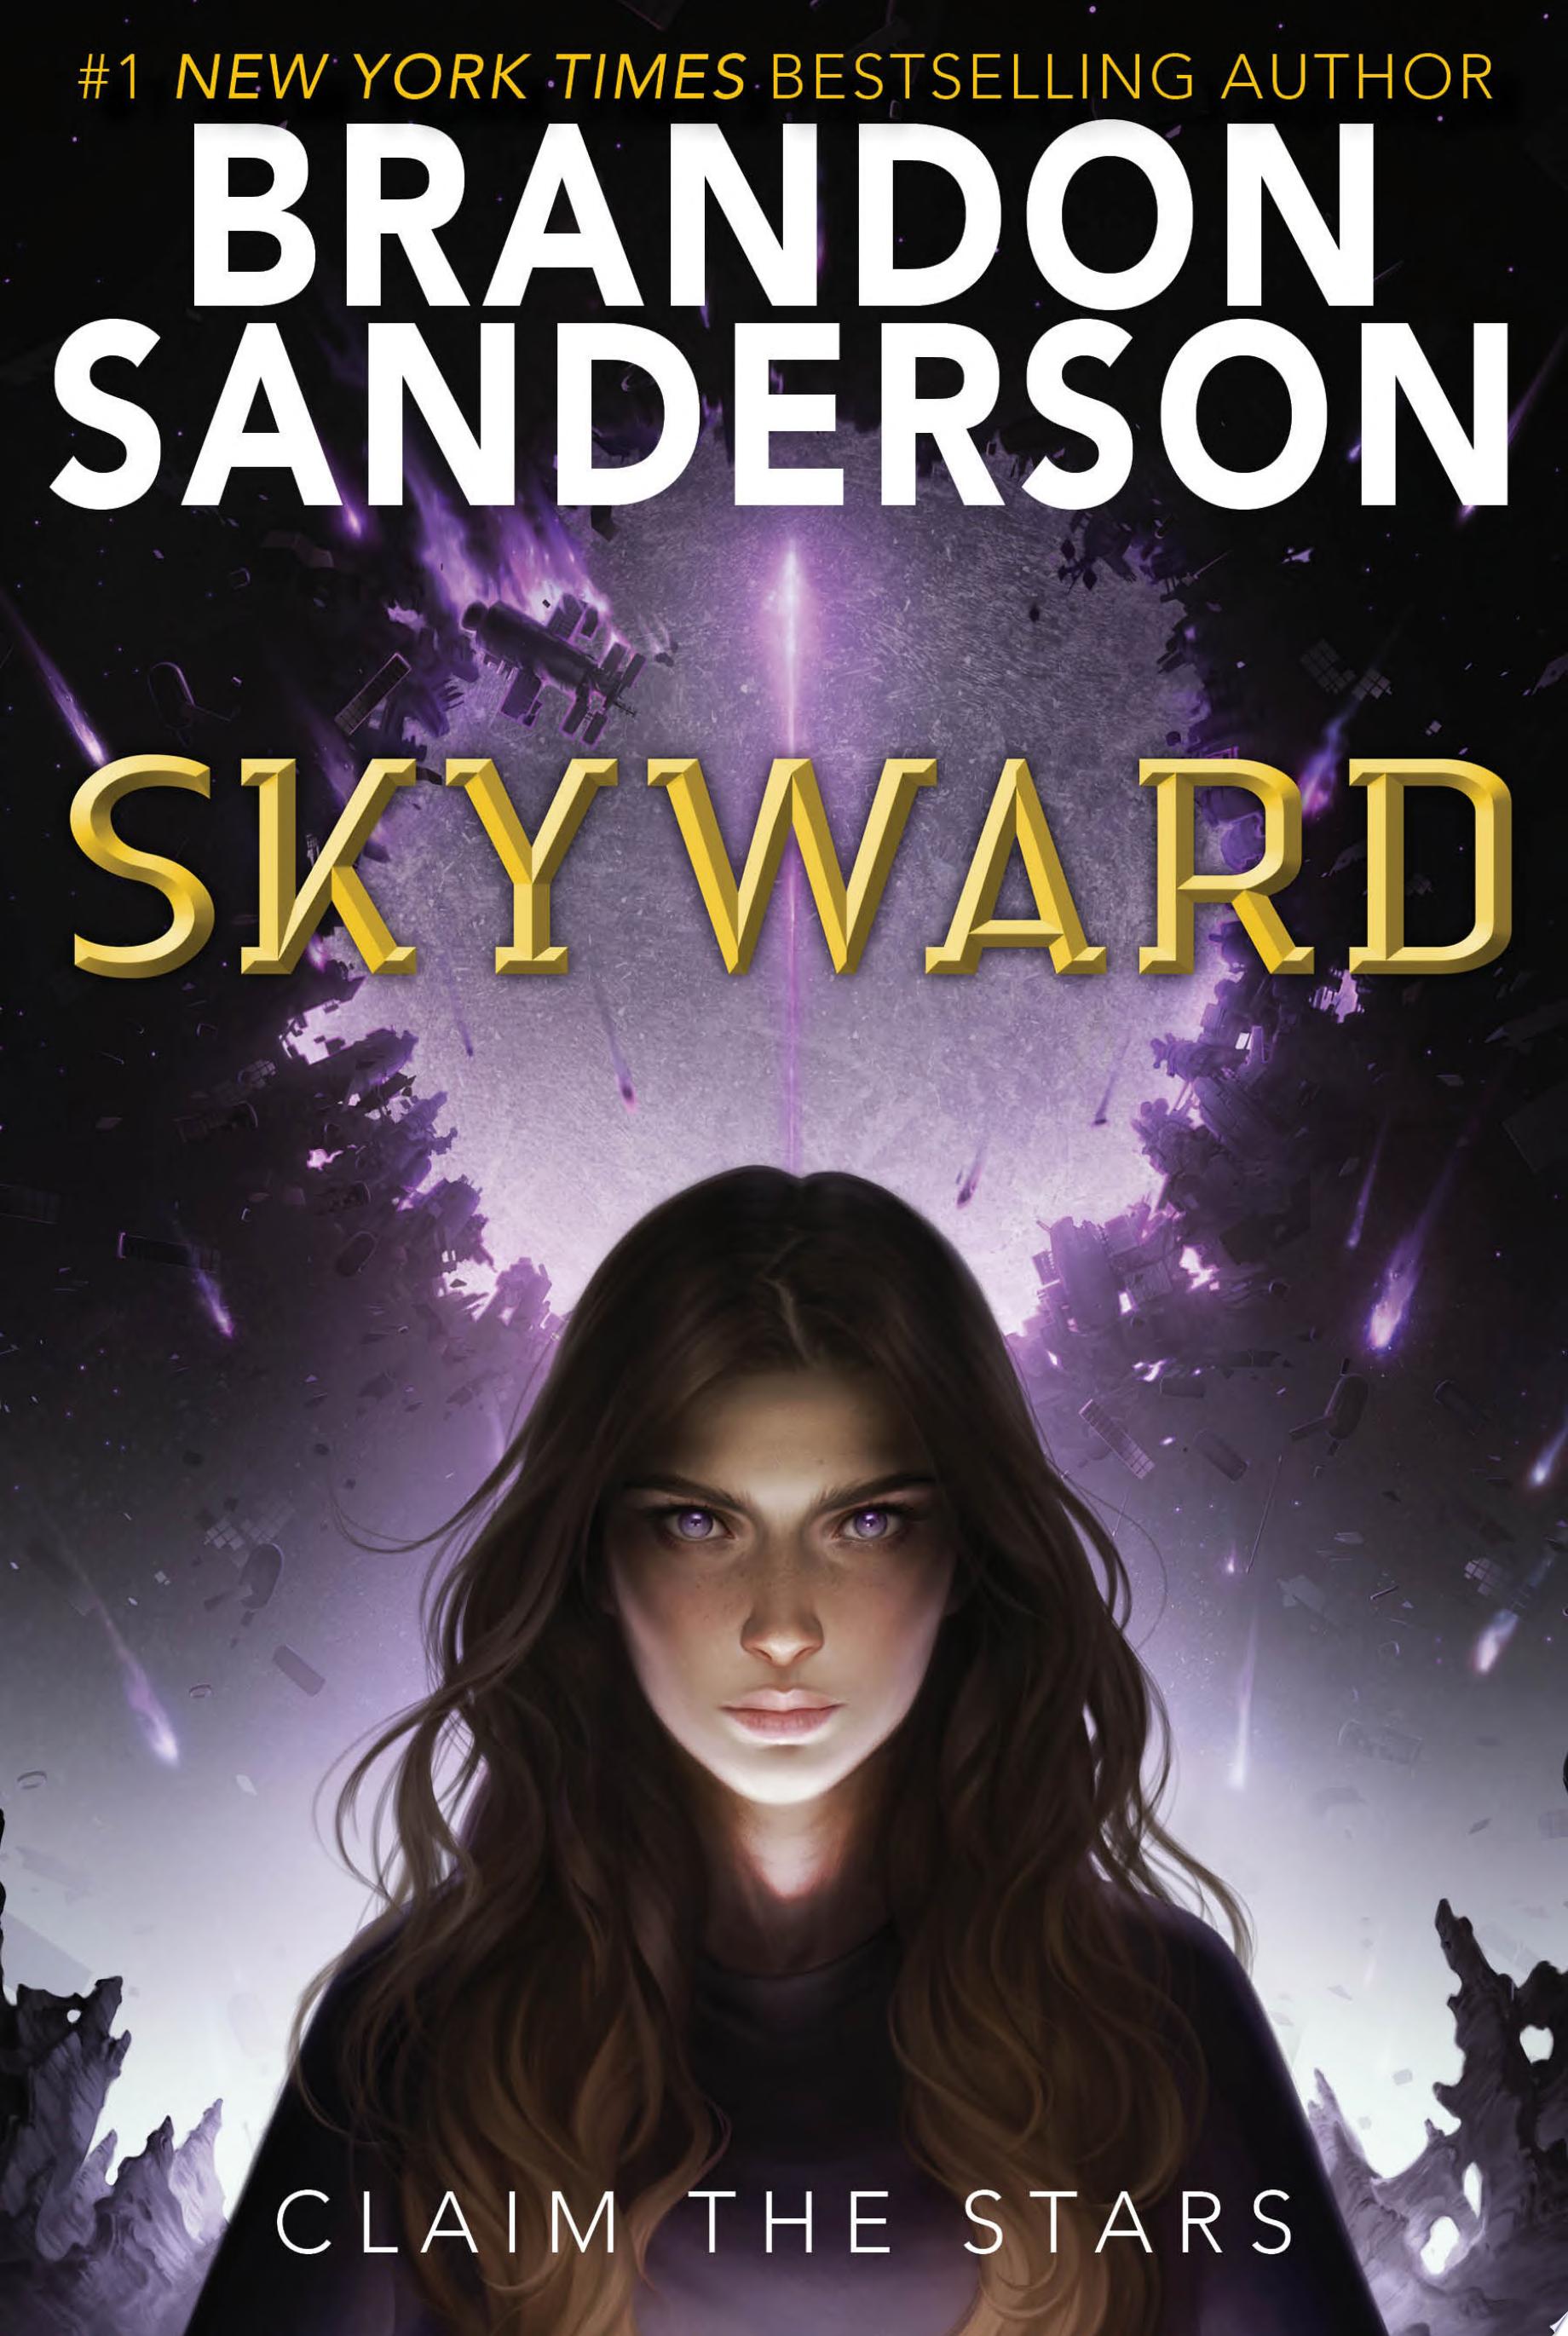 Image for "Skyward"